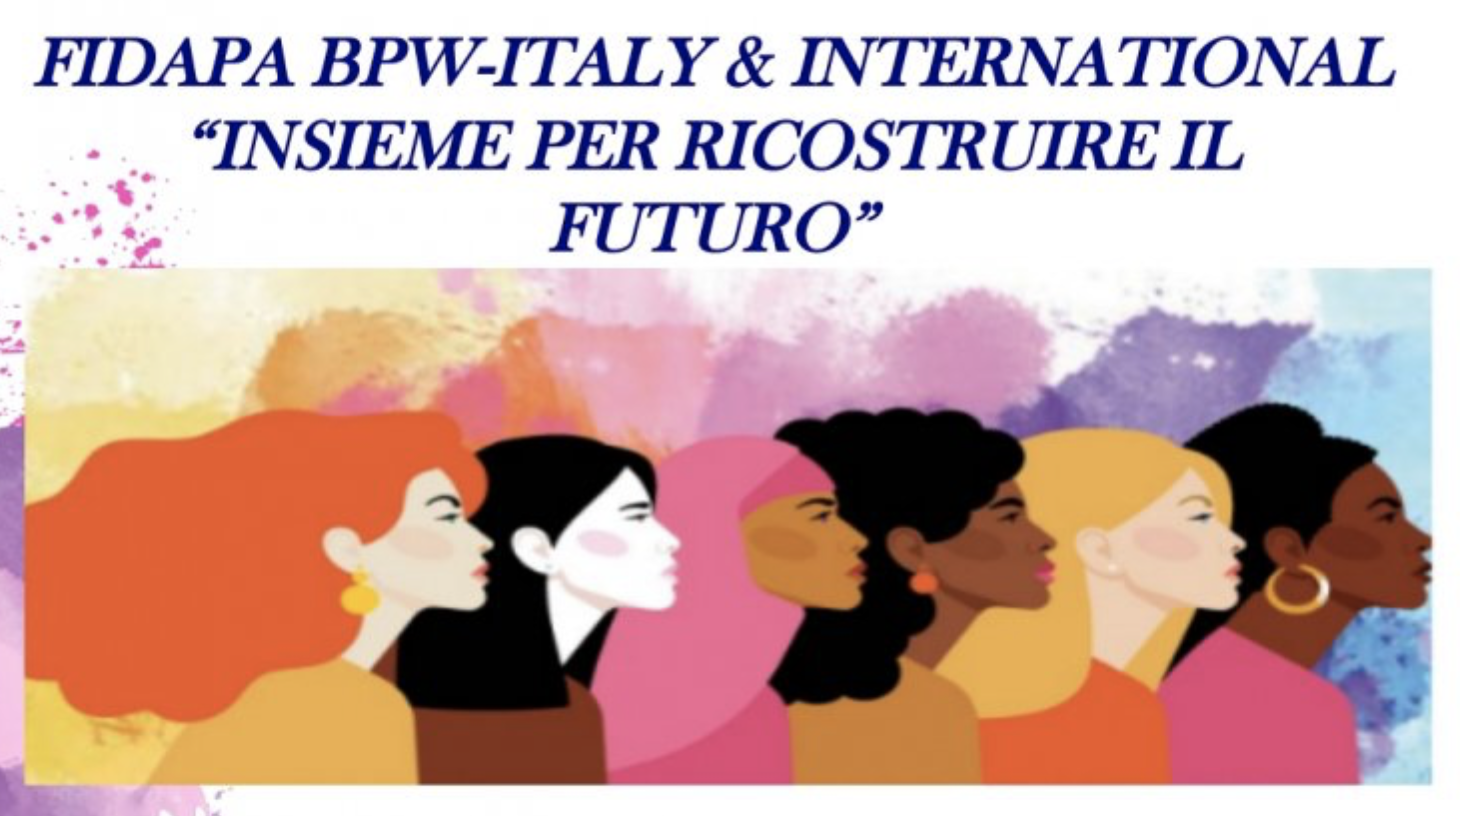 BPW Fidapa District Northwest - Convention on the International Theme